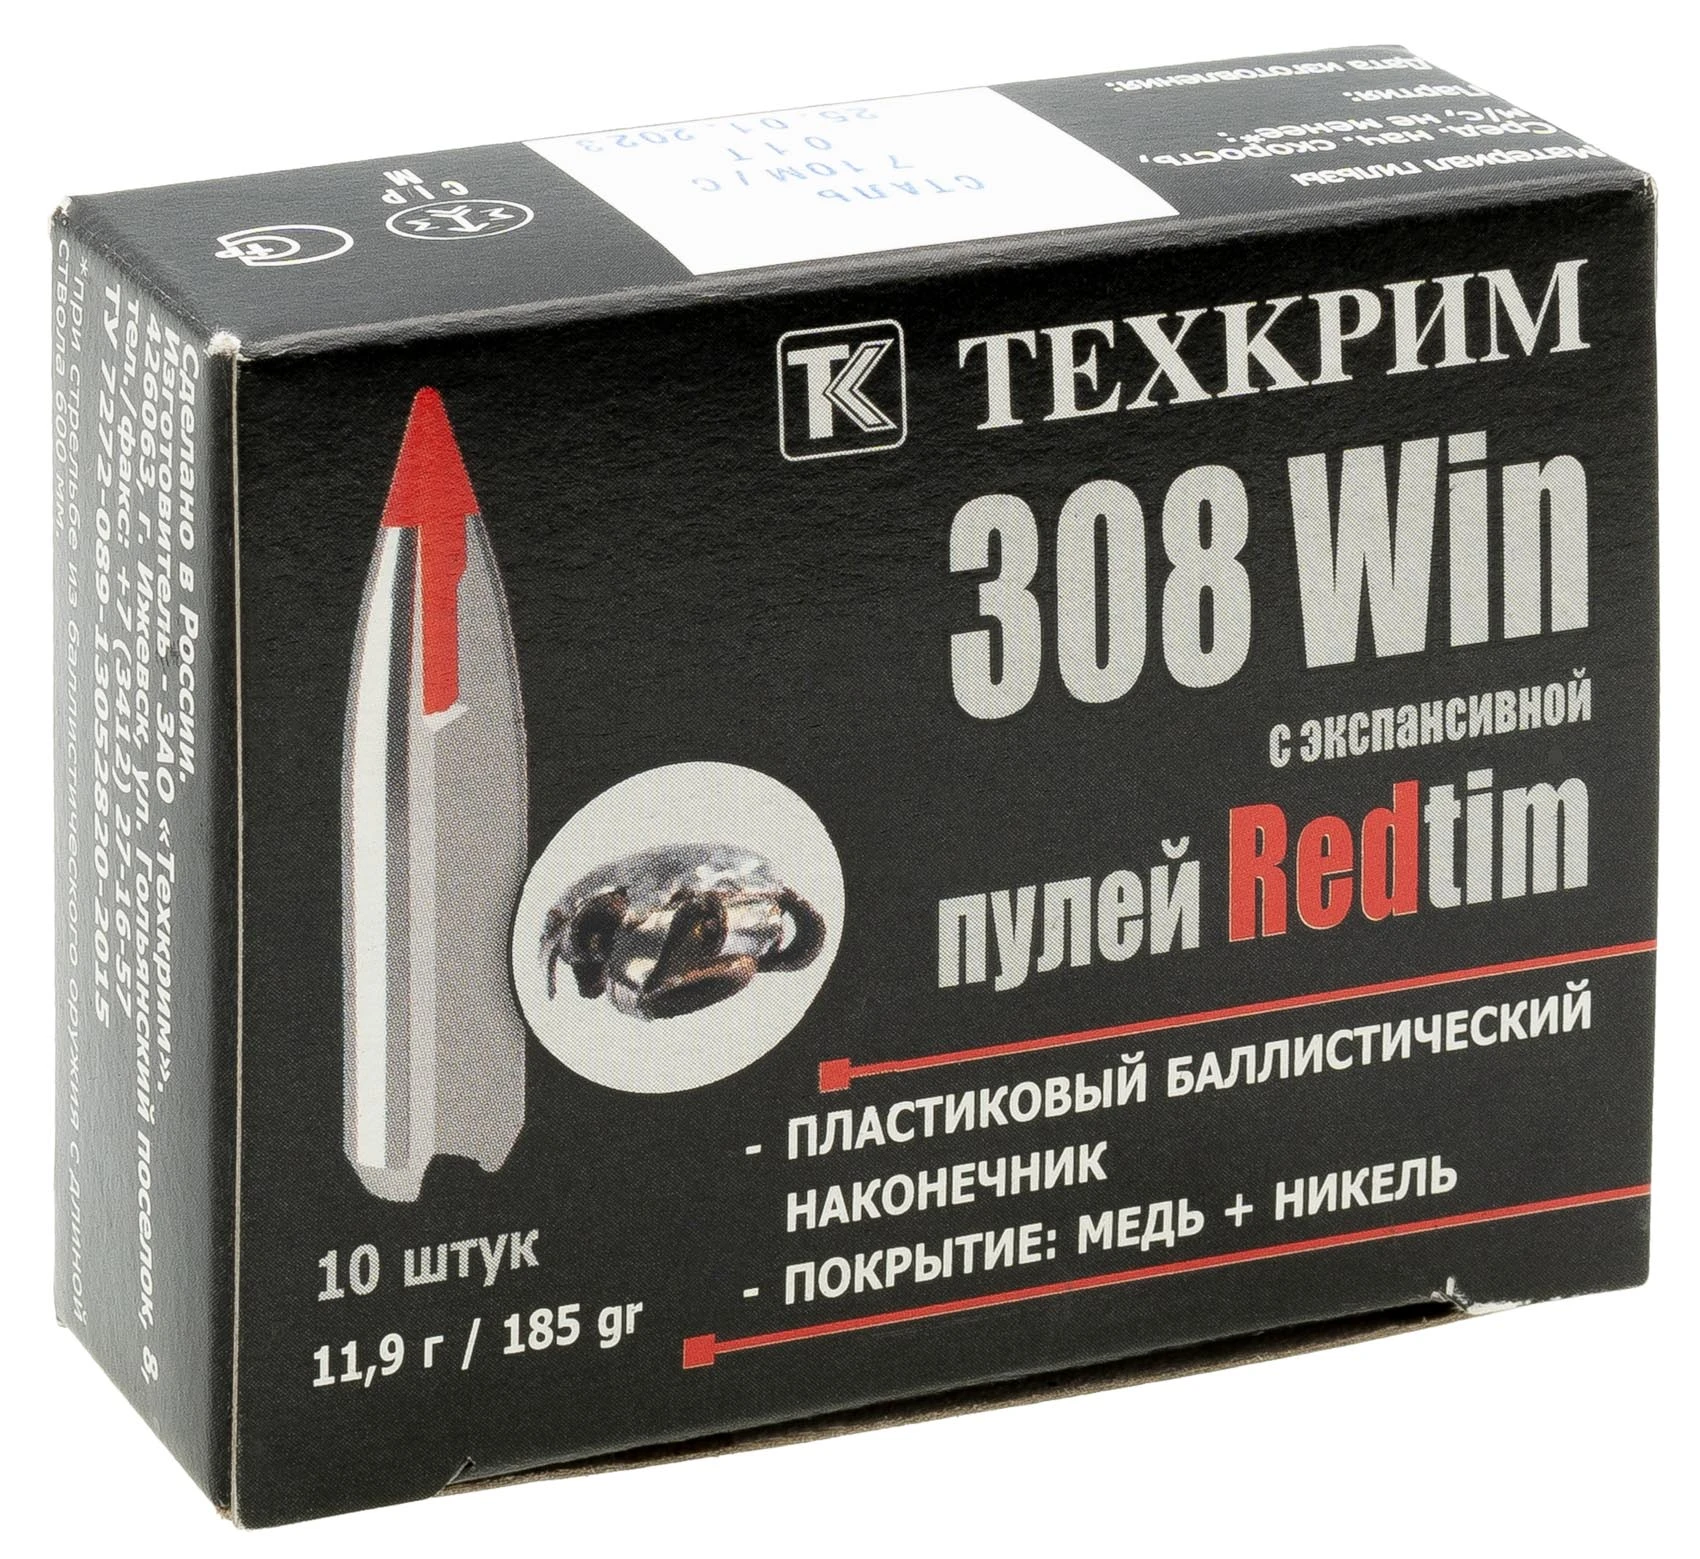 308 win Redtim 11.9 гр.